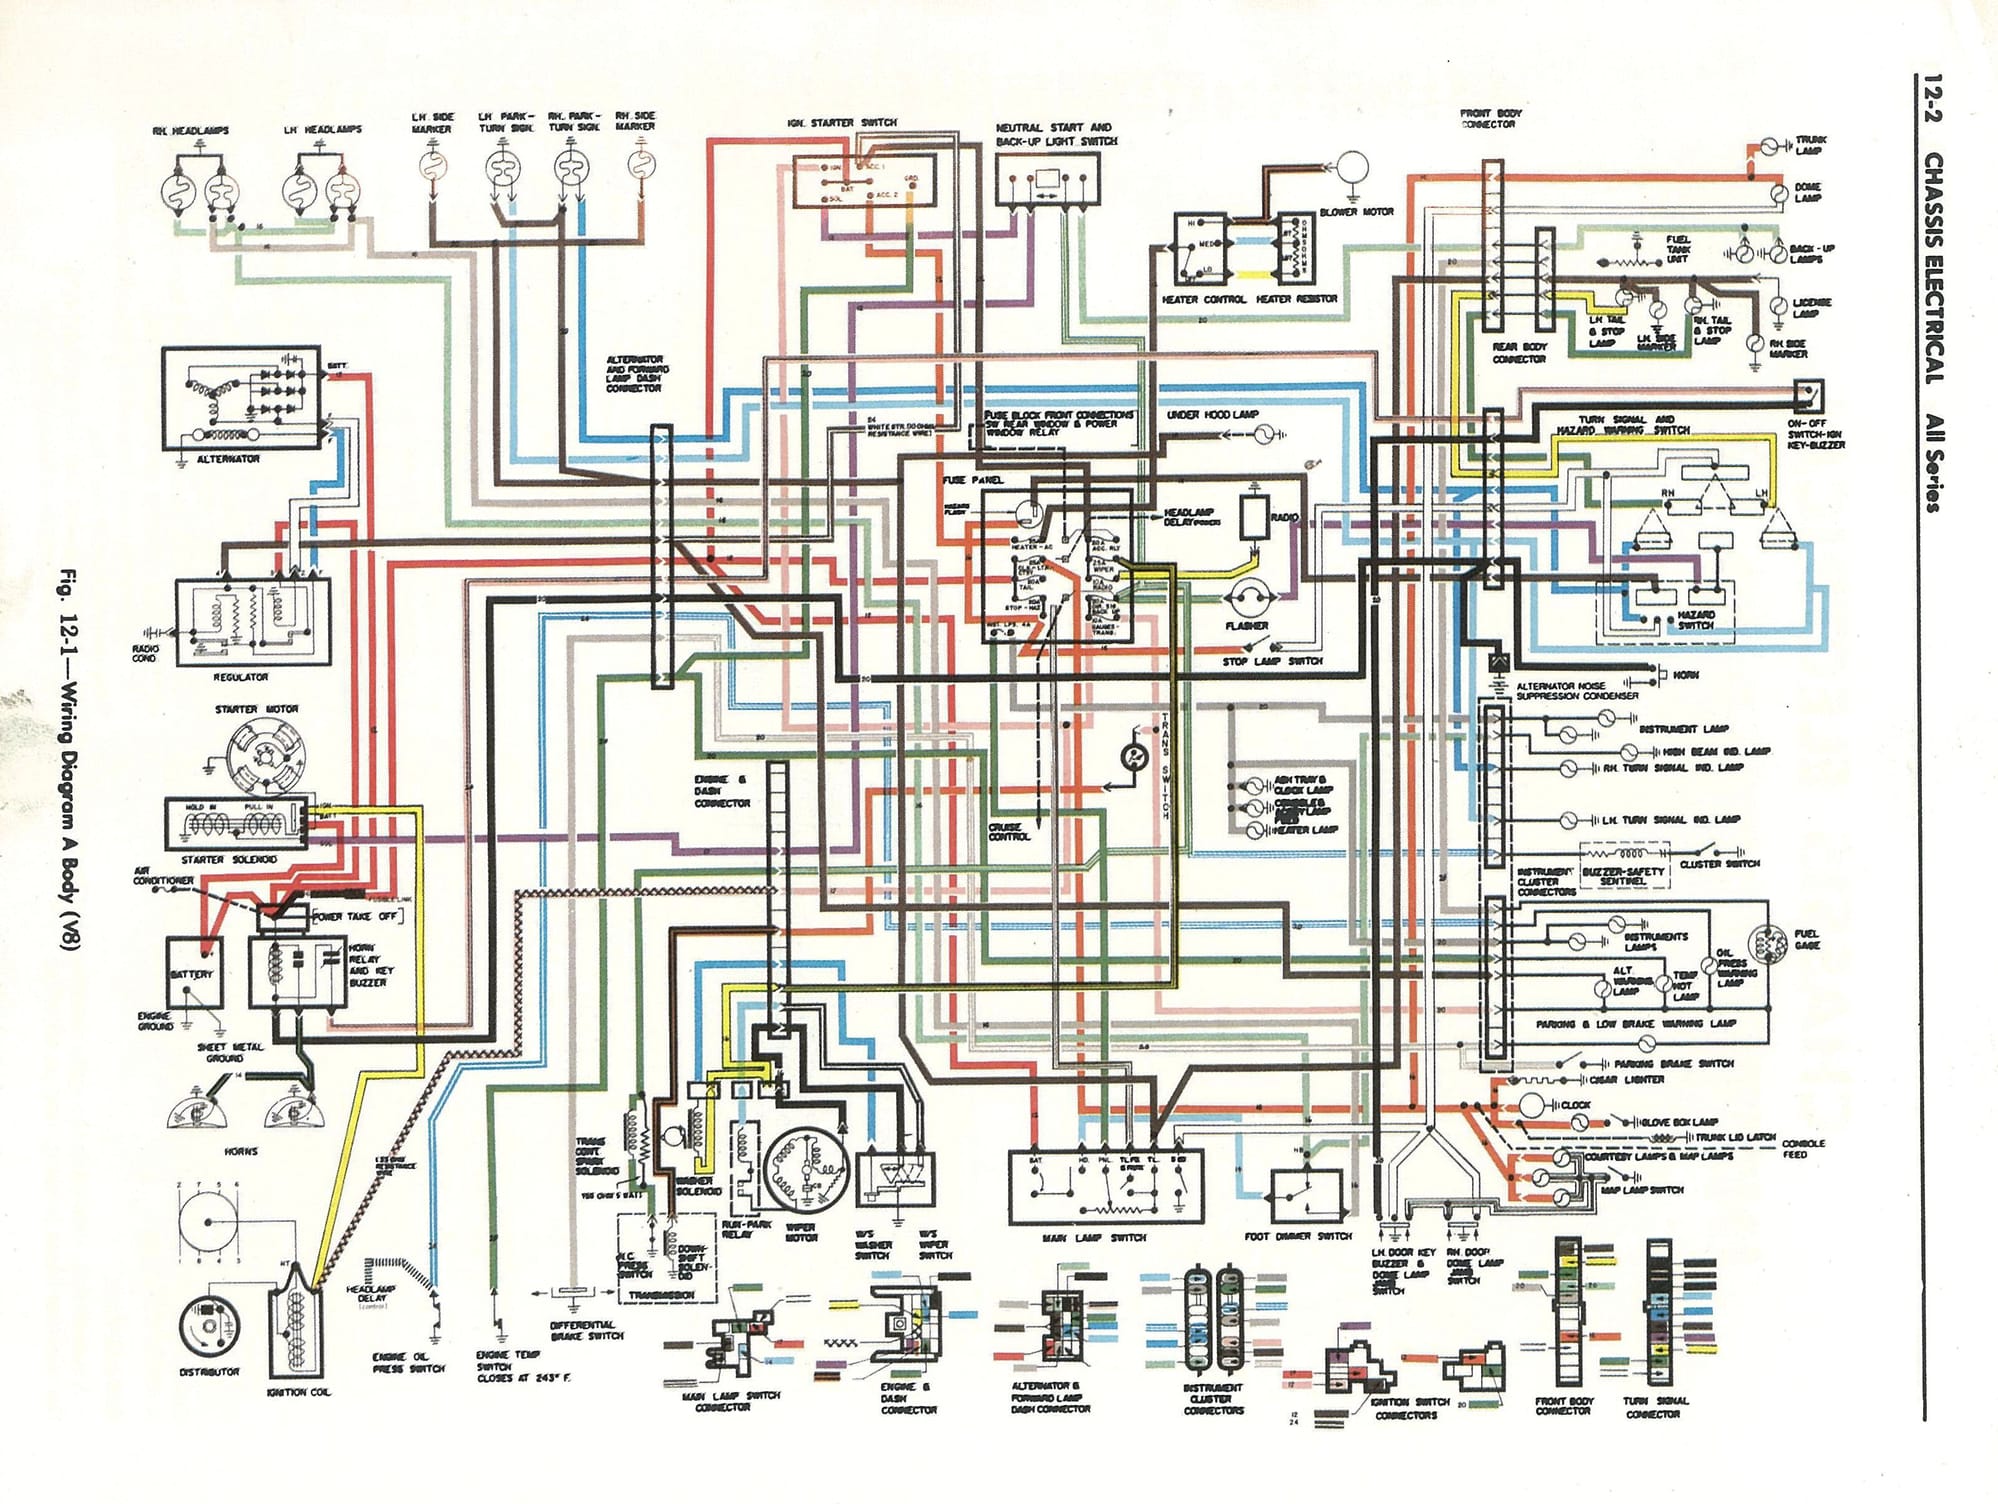 1968 pontiac catalina wiring diagram